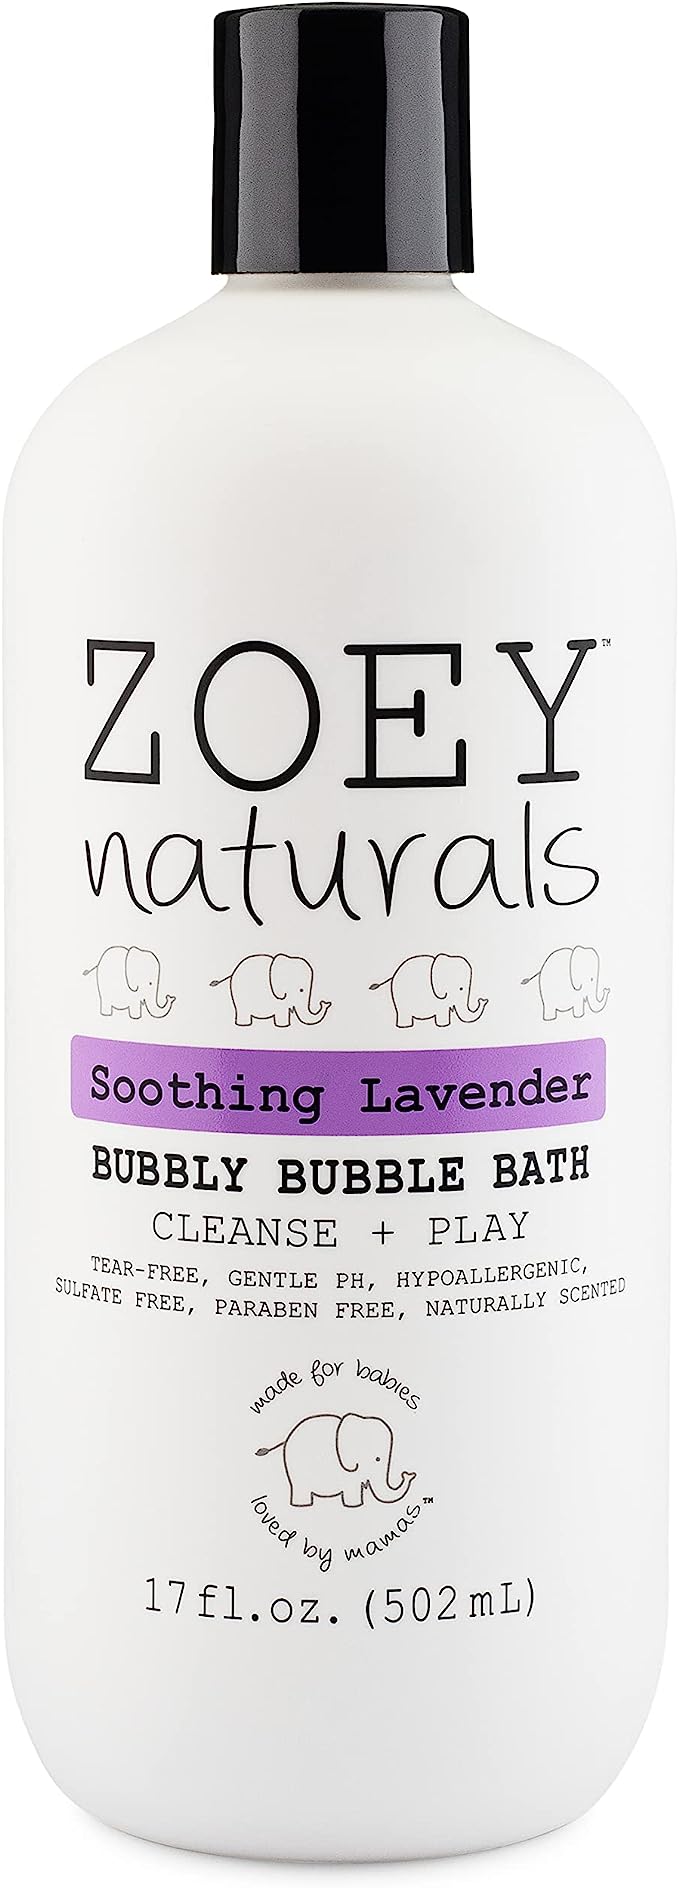 Bubbly Bubble Bath